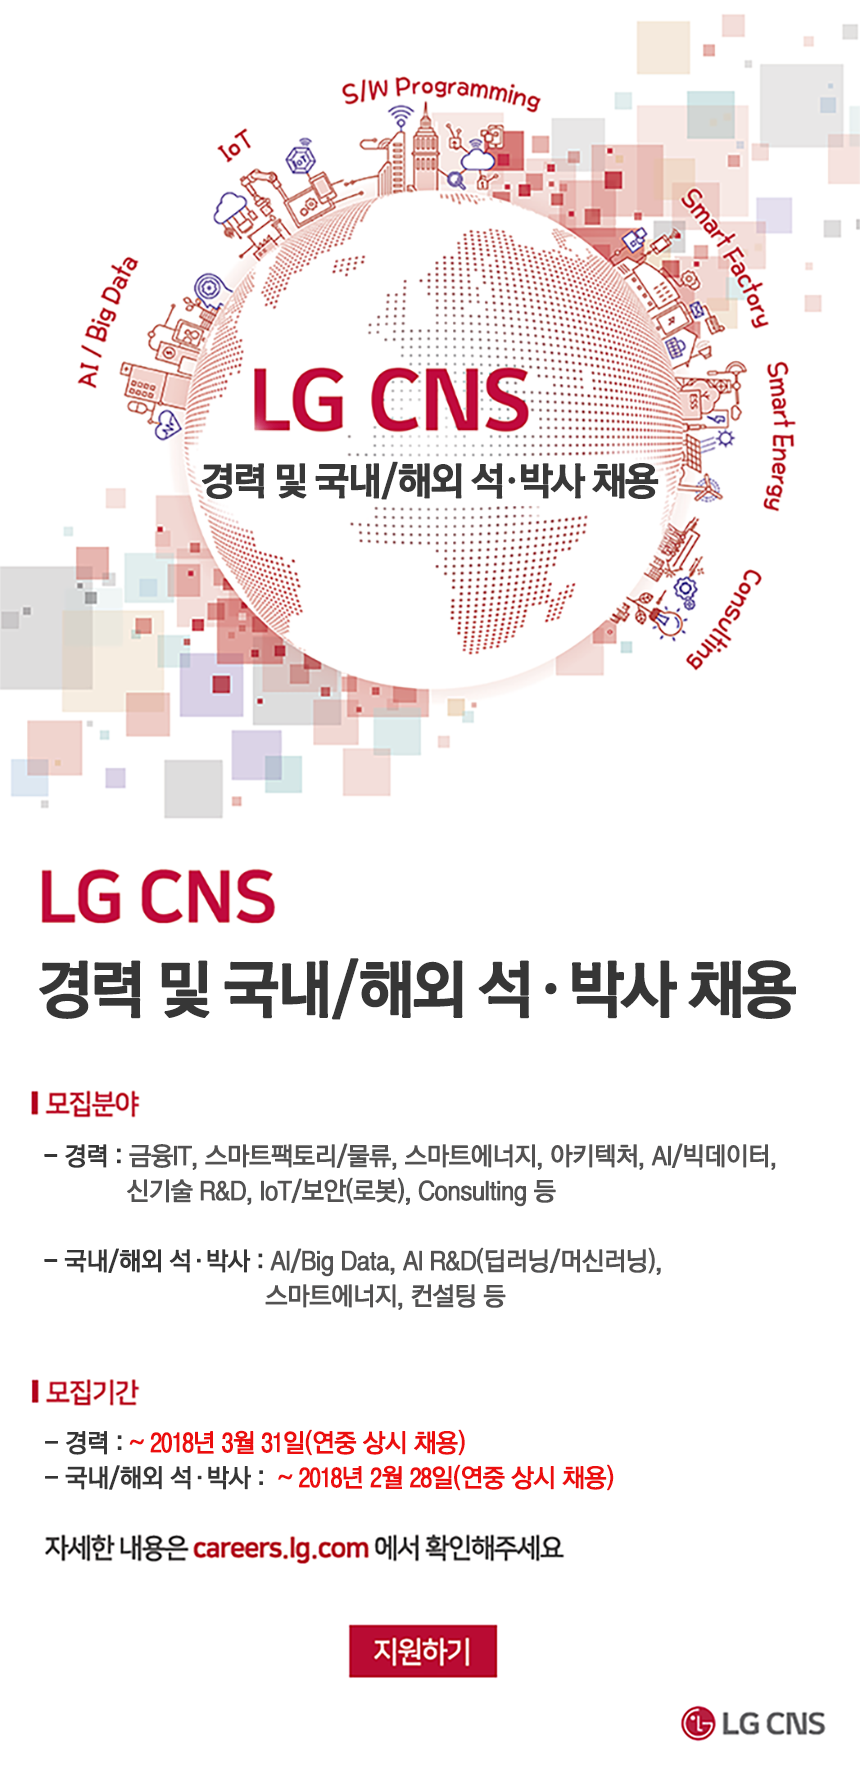 ㈜LG CNS 2018년 상반기 경력사원 및 해외/국내 석·박사 채용